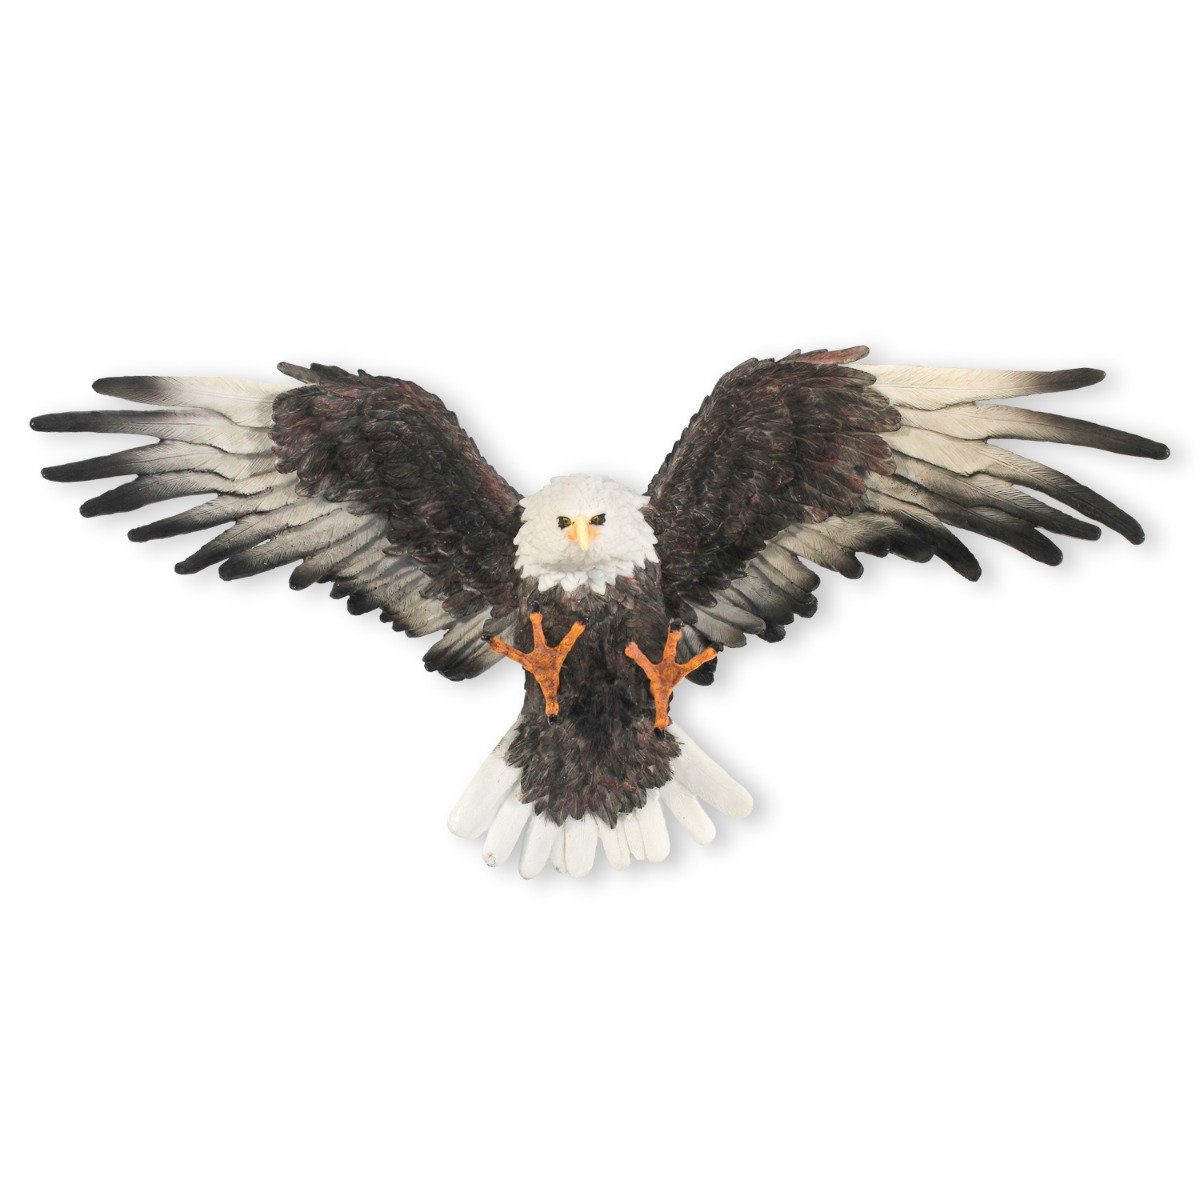 Adler Gartenfigur, Dekofigur Wetterfest, Figur Handbemalt, Adler möglich Dekofigur fliegend colourliving Wandmontage